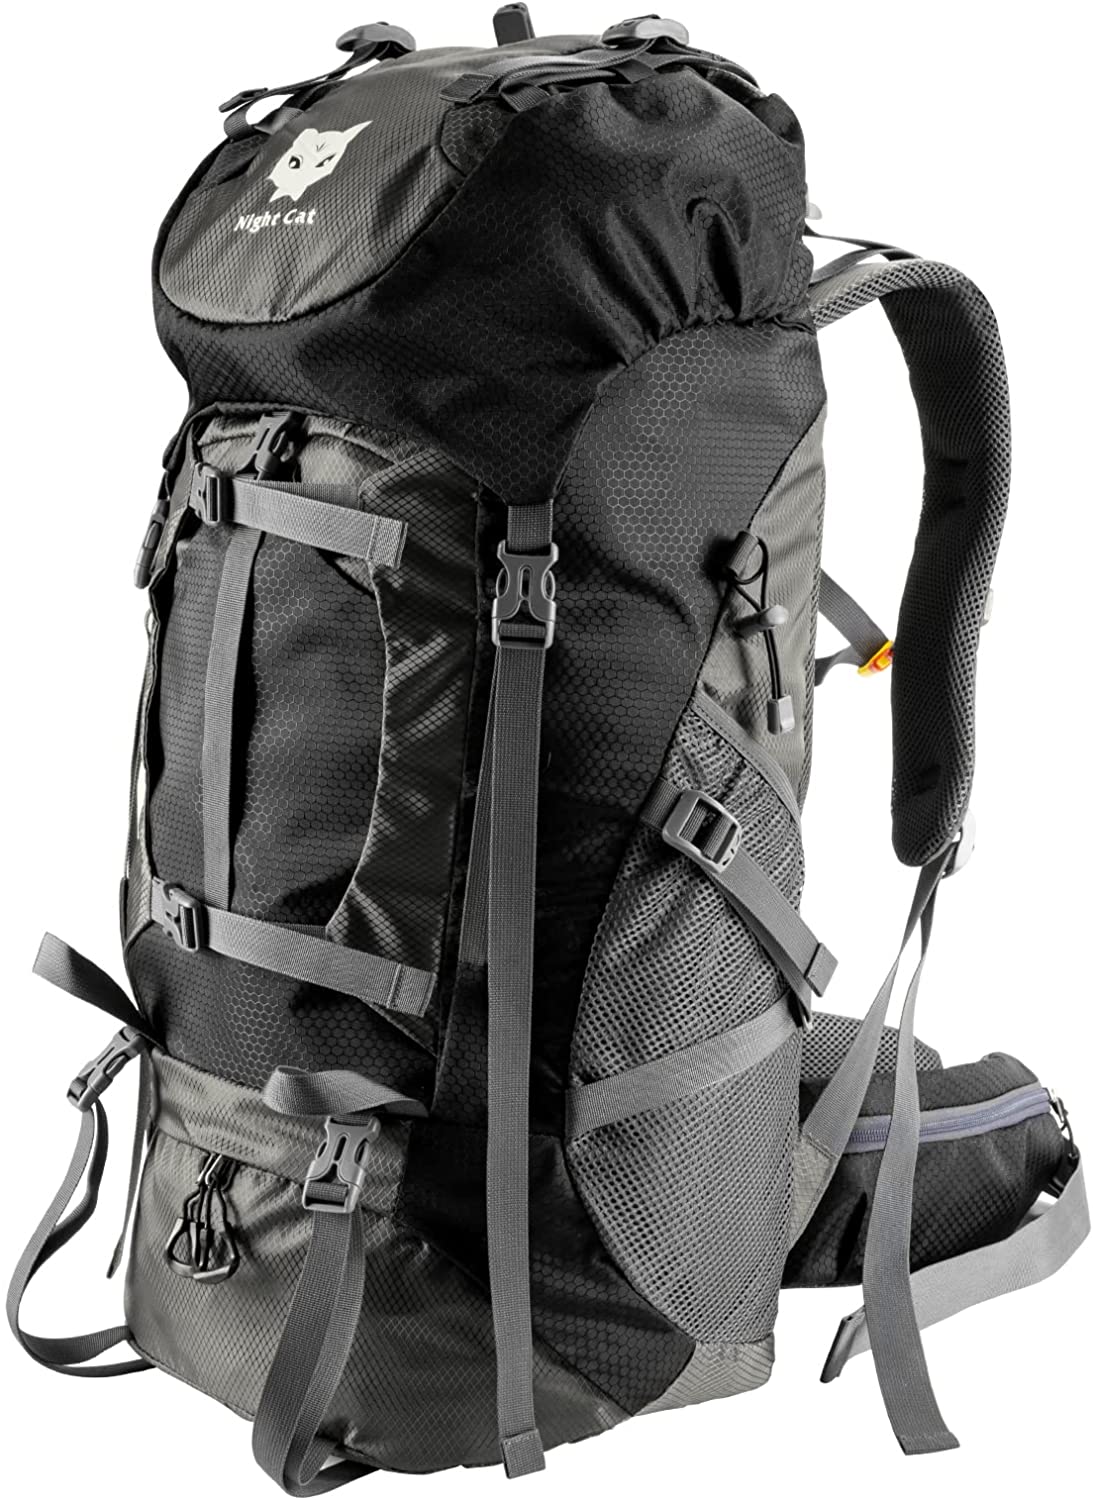 Night Cat Internal Frame Hiking Backpacks 75L Camping Backpack for Men or Women